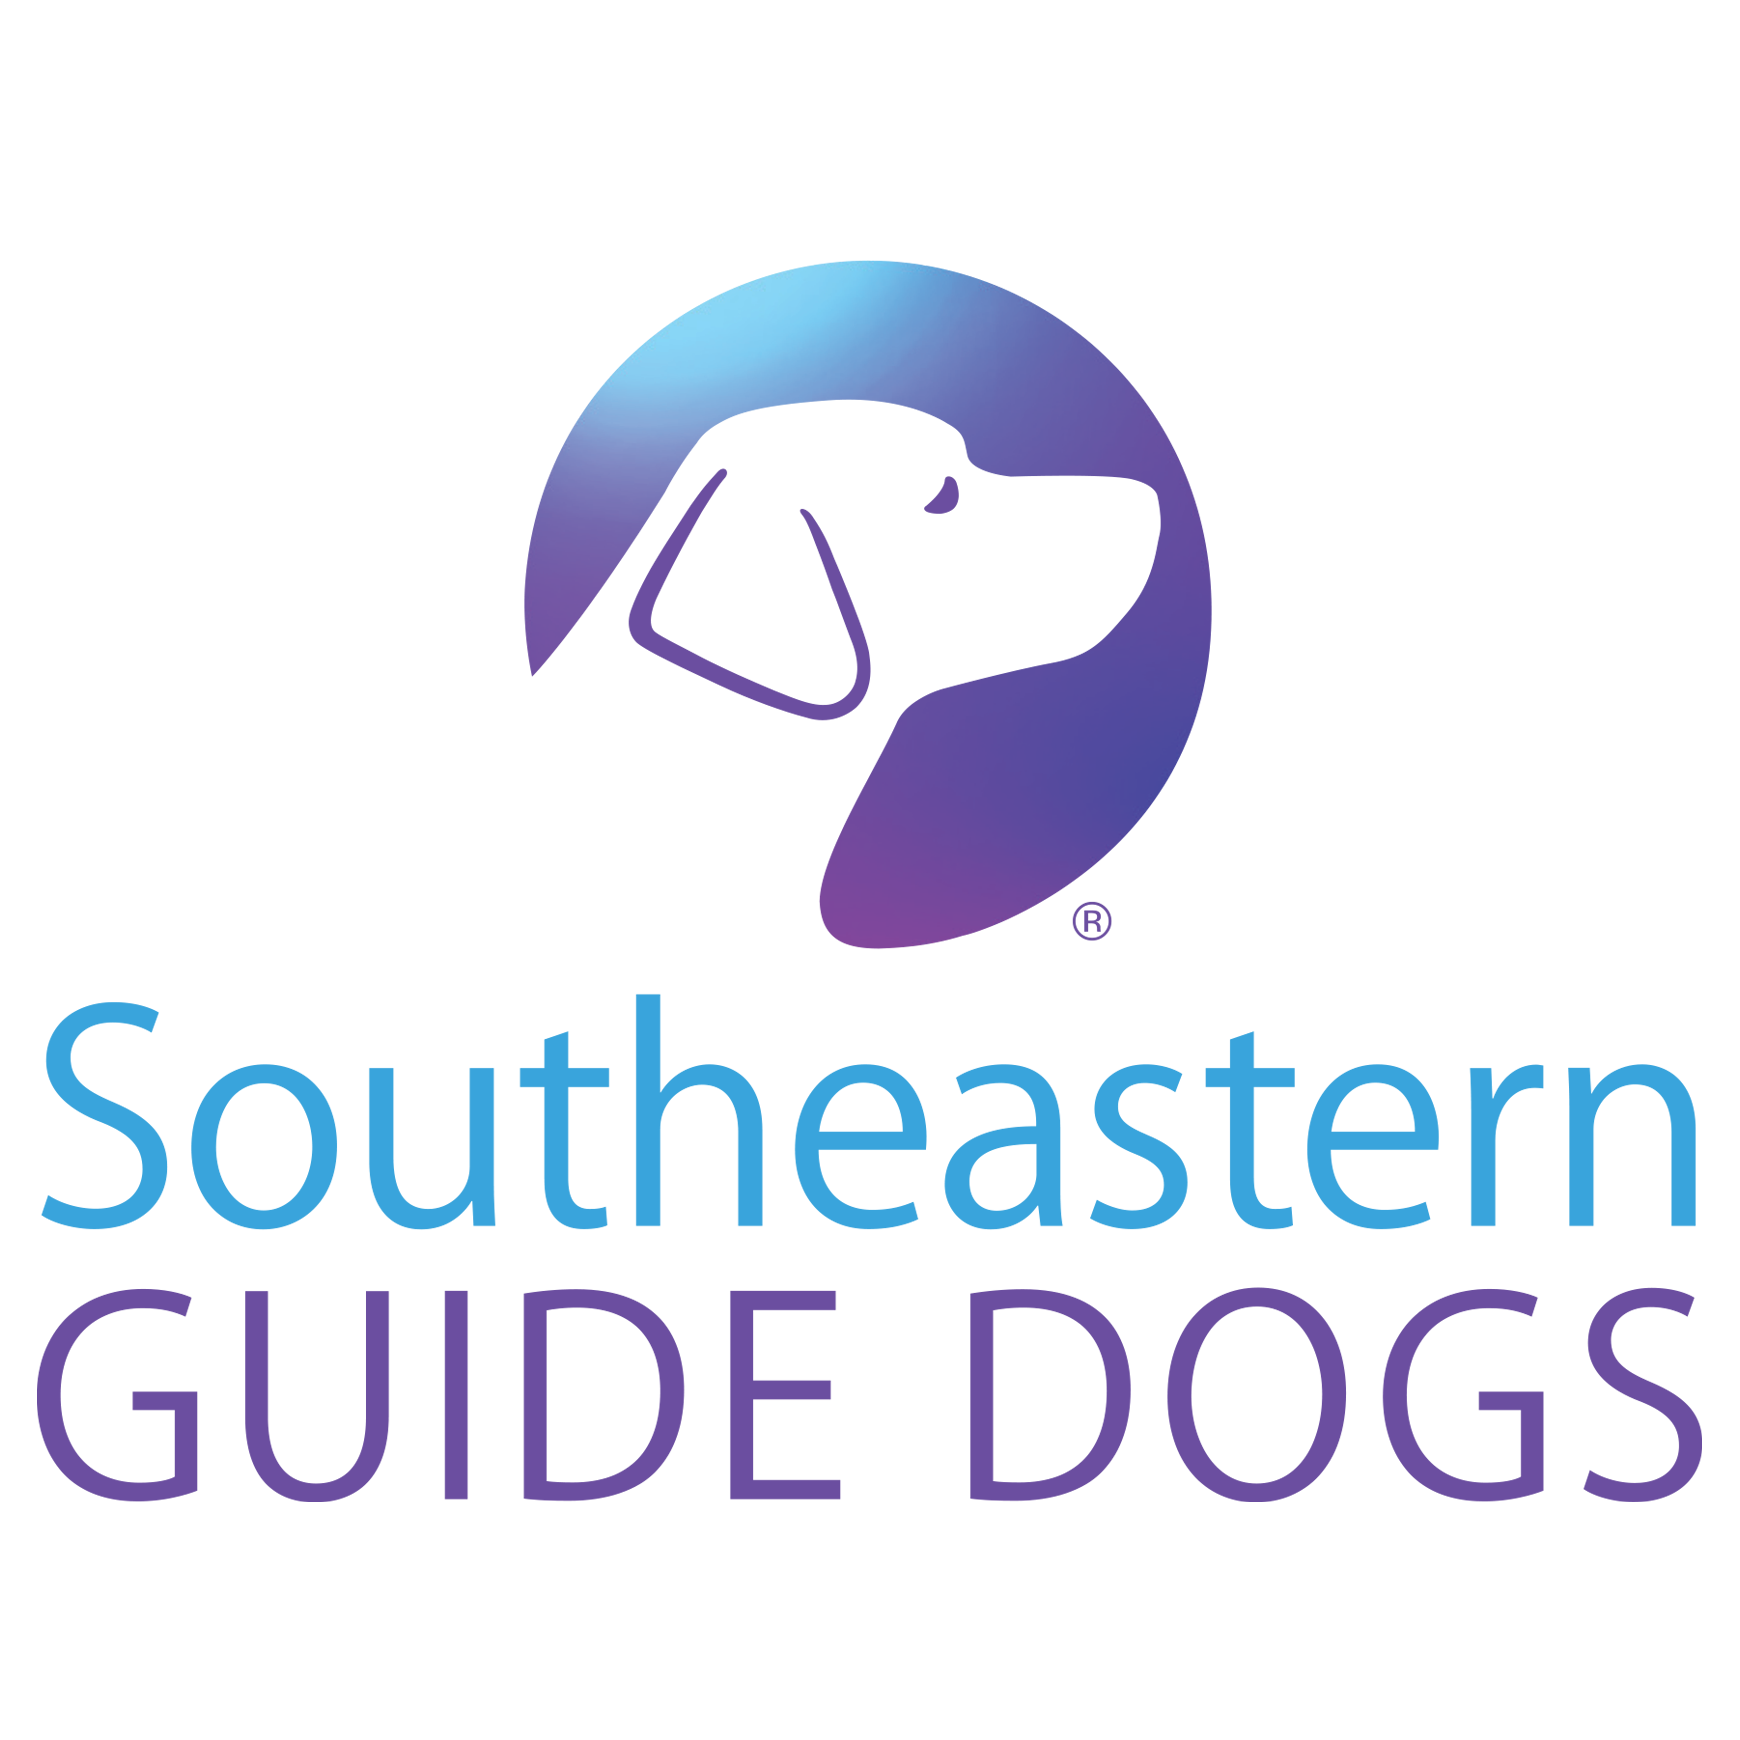 southeastern-guide-dogs-logo